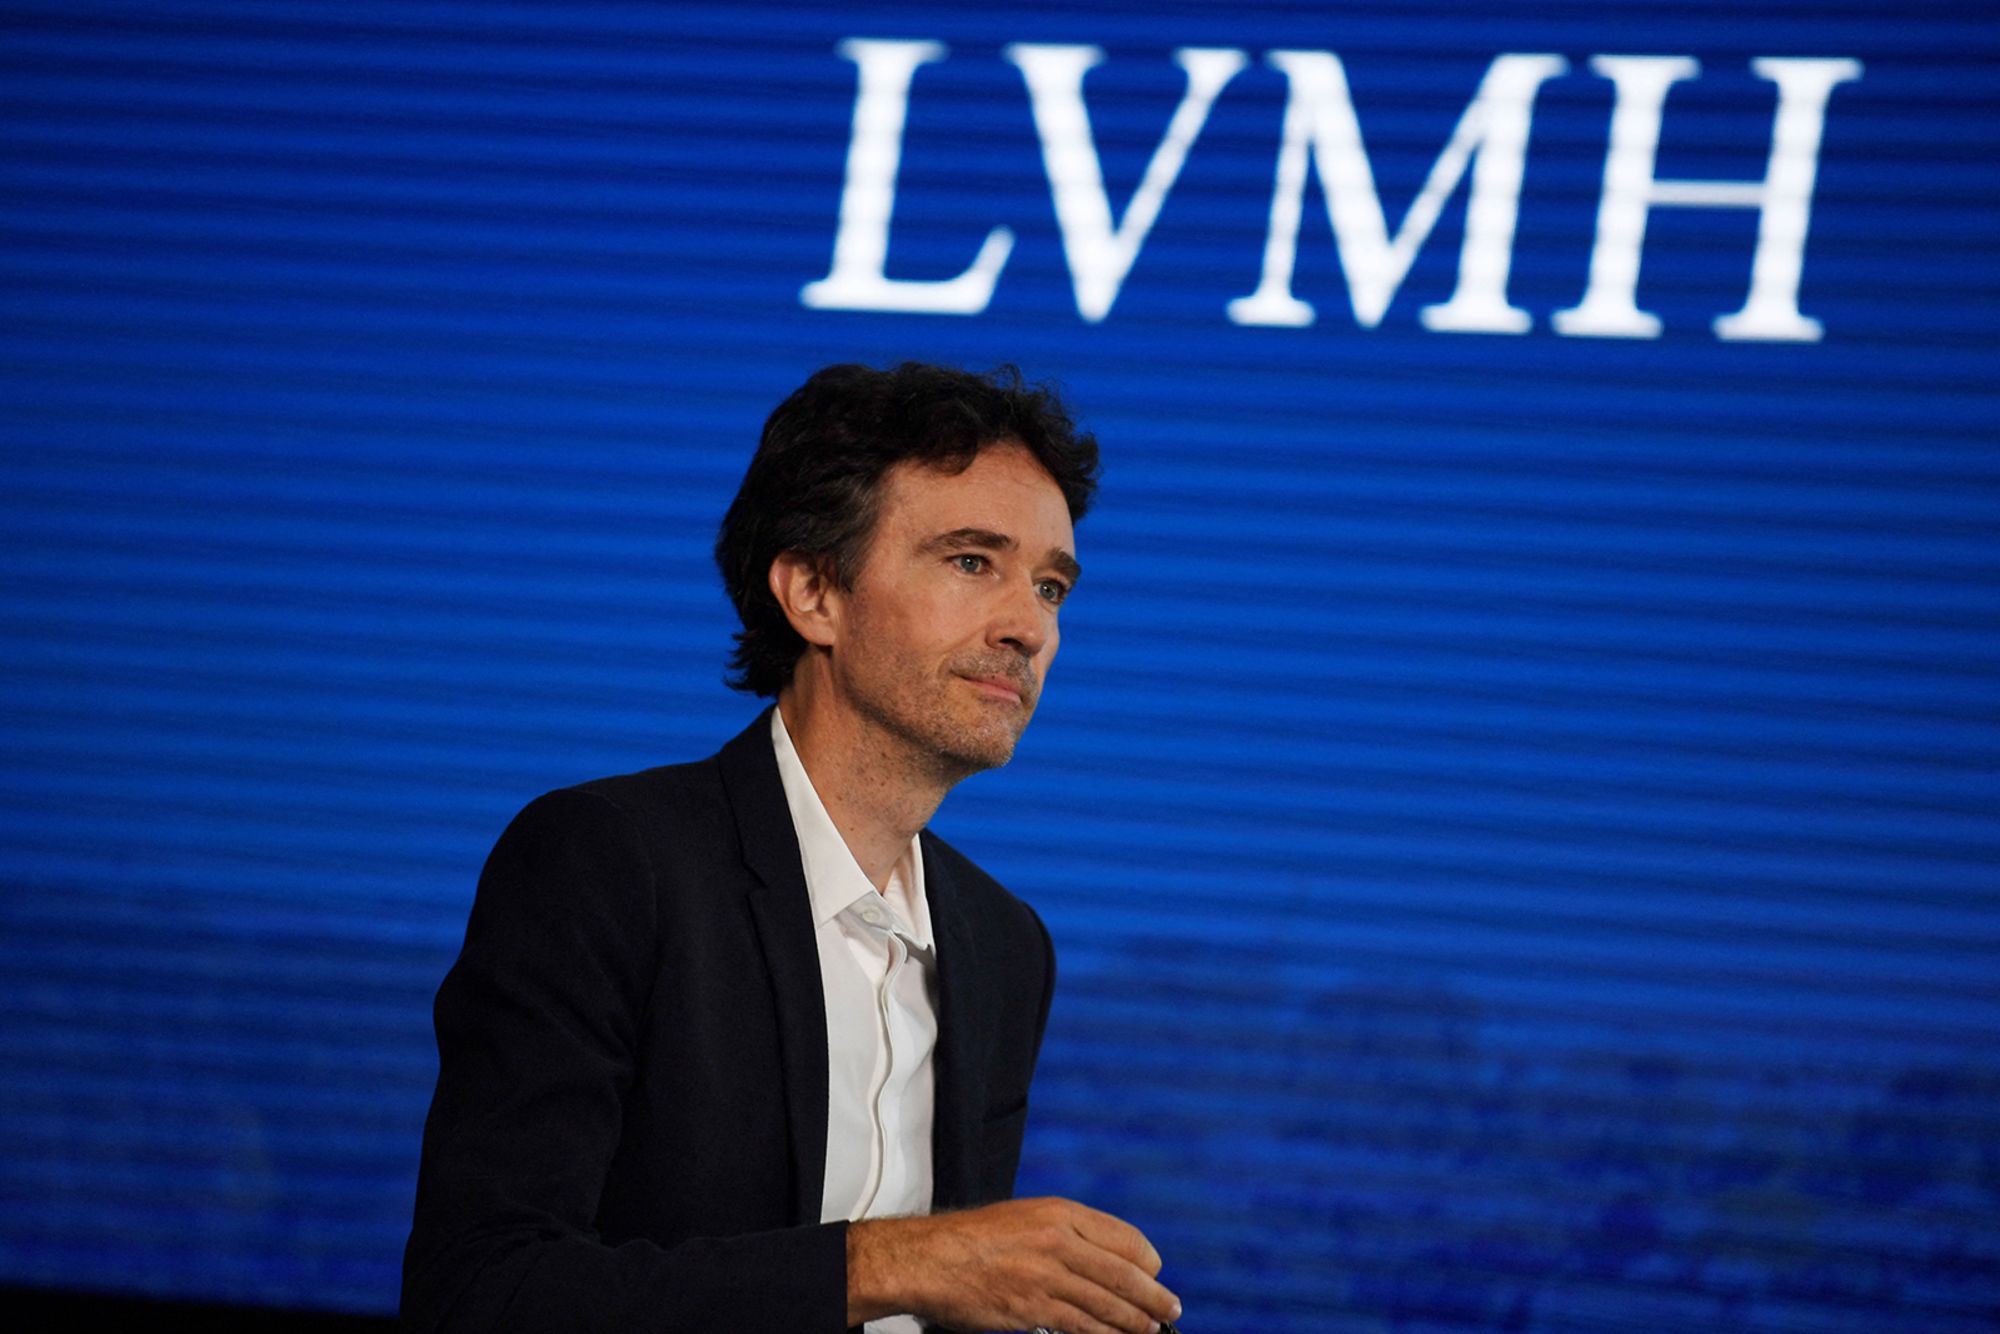 Antoine Arnault Officially CEO of LVMH Holding Company